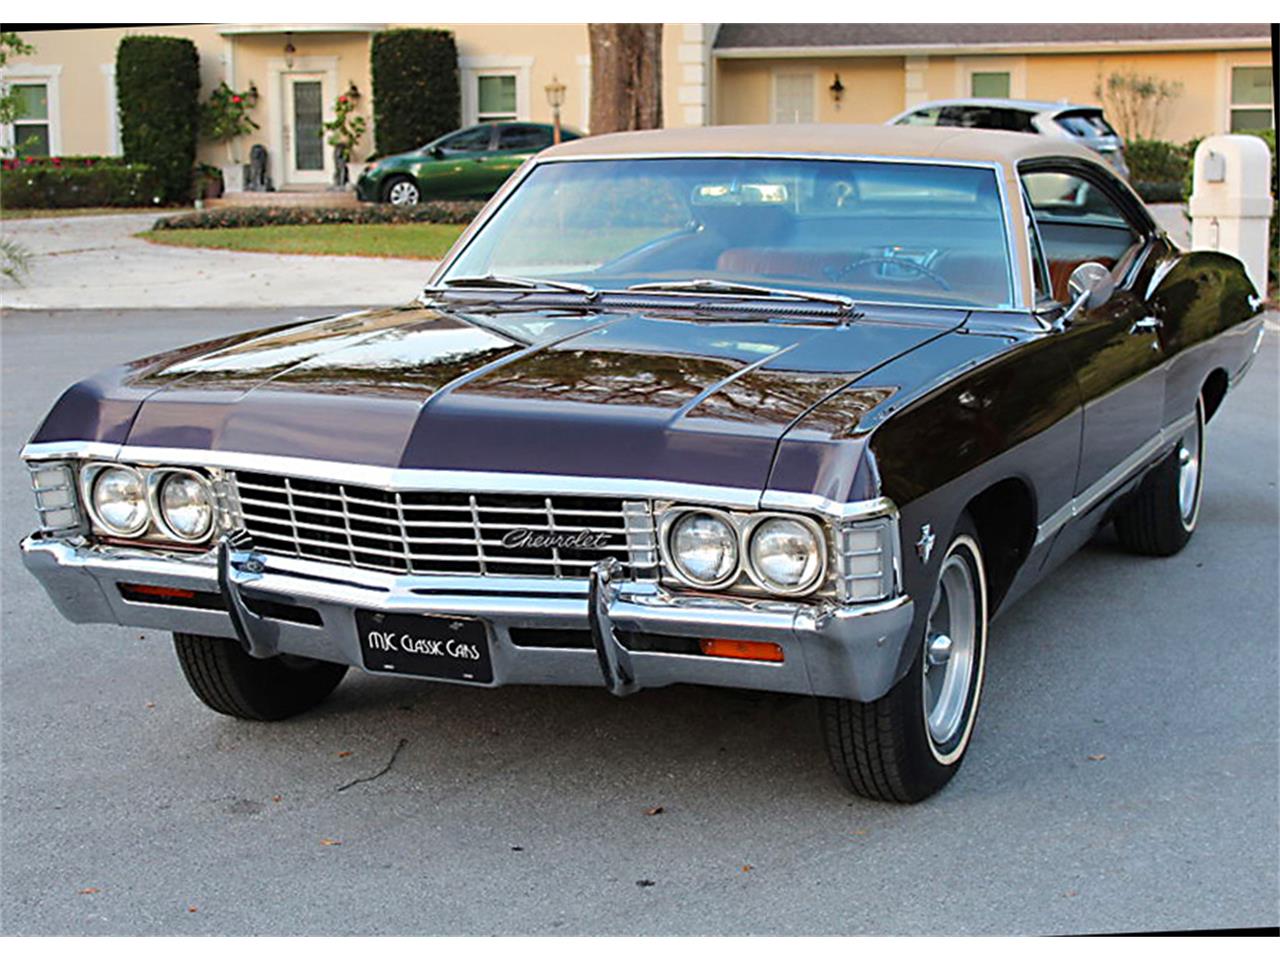 For Sale: 1967 Chevrolet Impala in Lakeland, Florida.